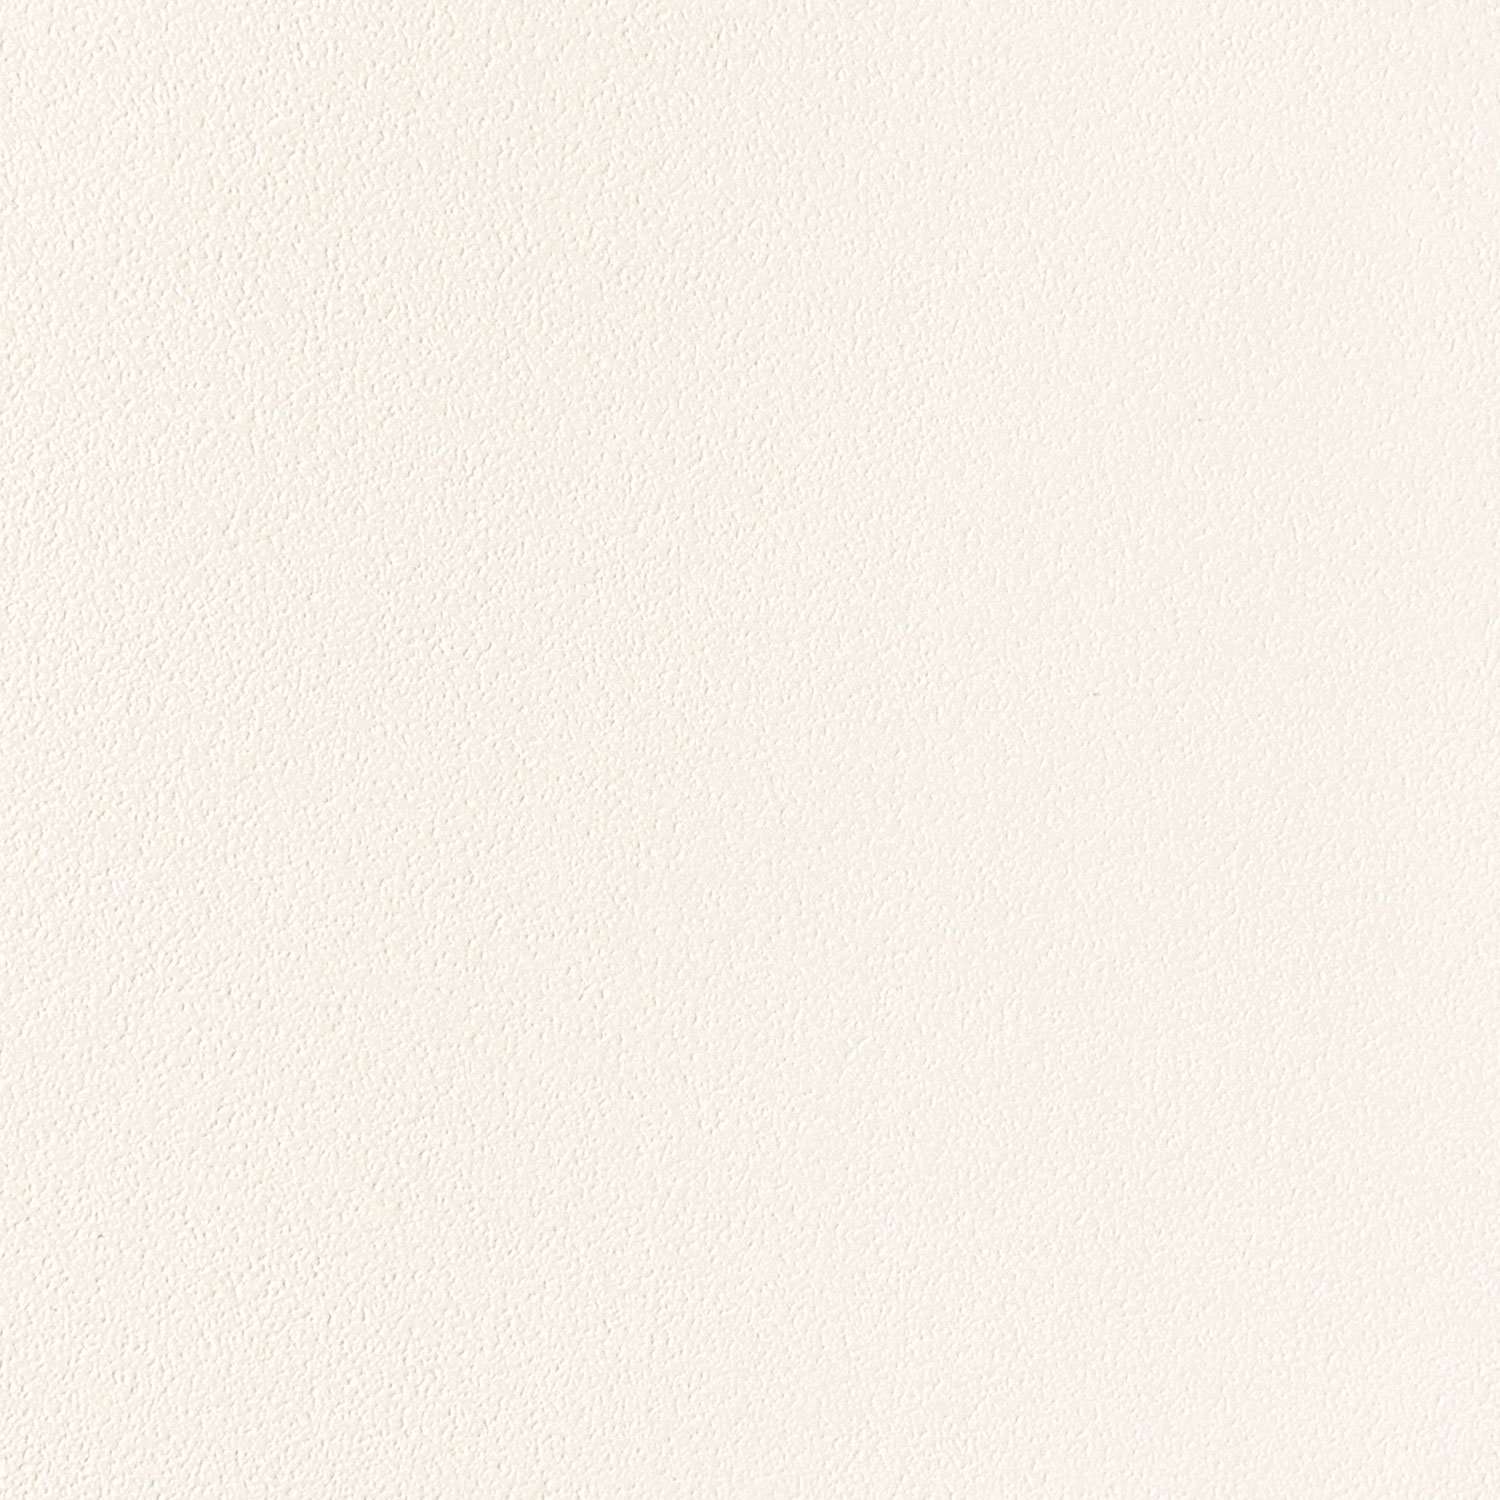 Керамическая плитка Tubadzin P-All in White/White, цвет белый, поверхность матовая, квадрат, 598x598